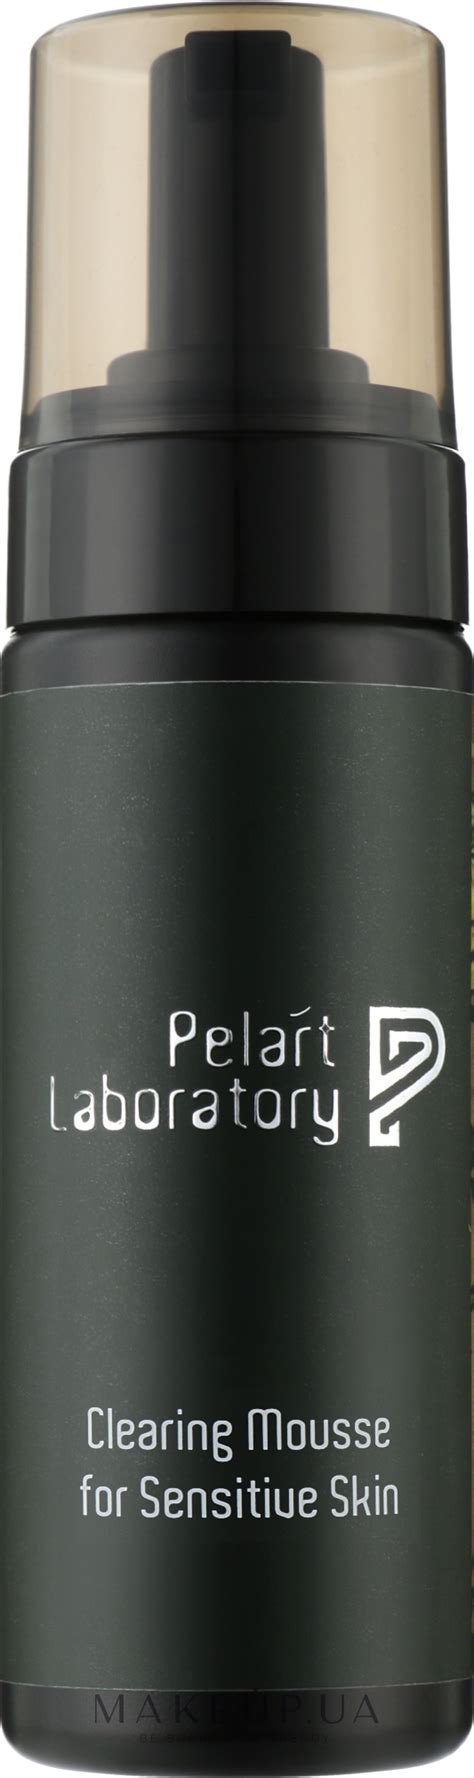 Pelart Laboratory Clearing Mousse For Sensitive Skin Мусс для